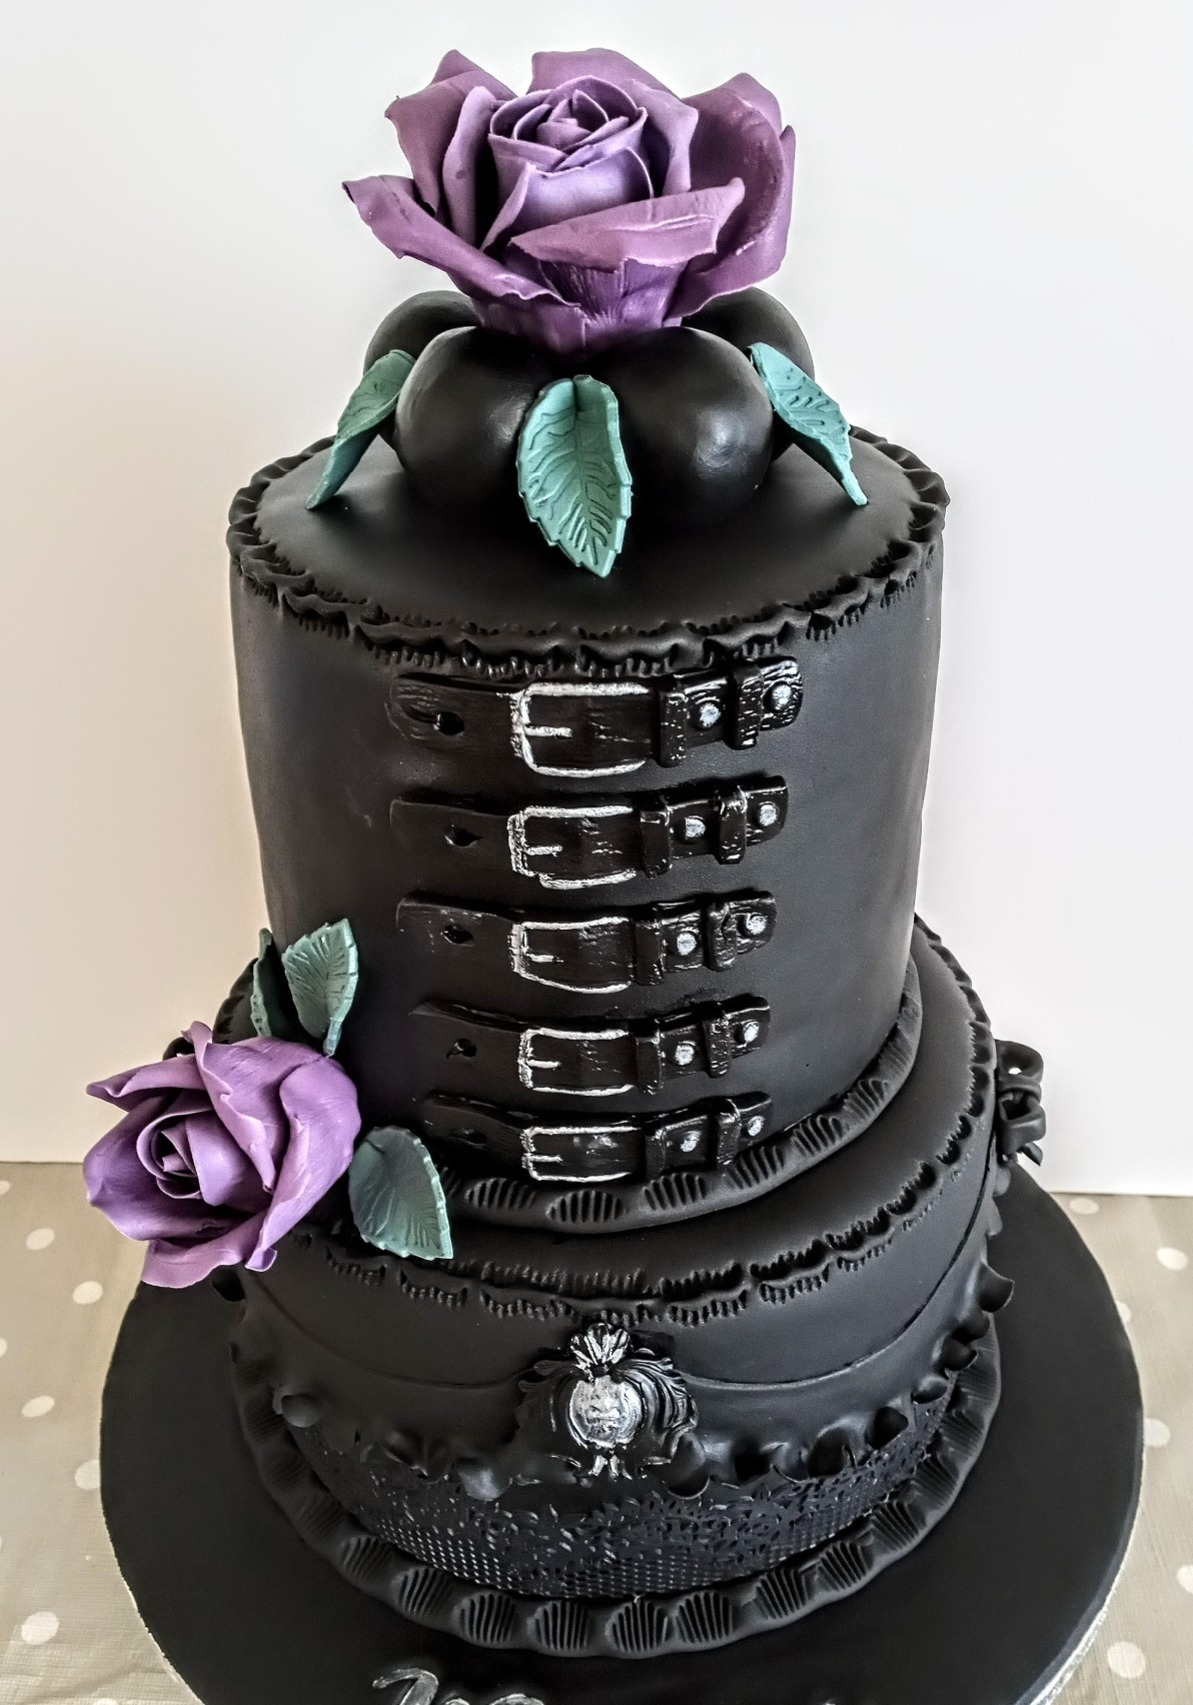 2 Tier Gothic style wedding/birthday cake